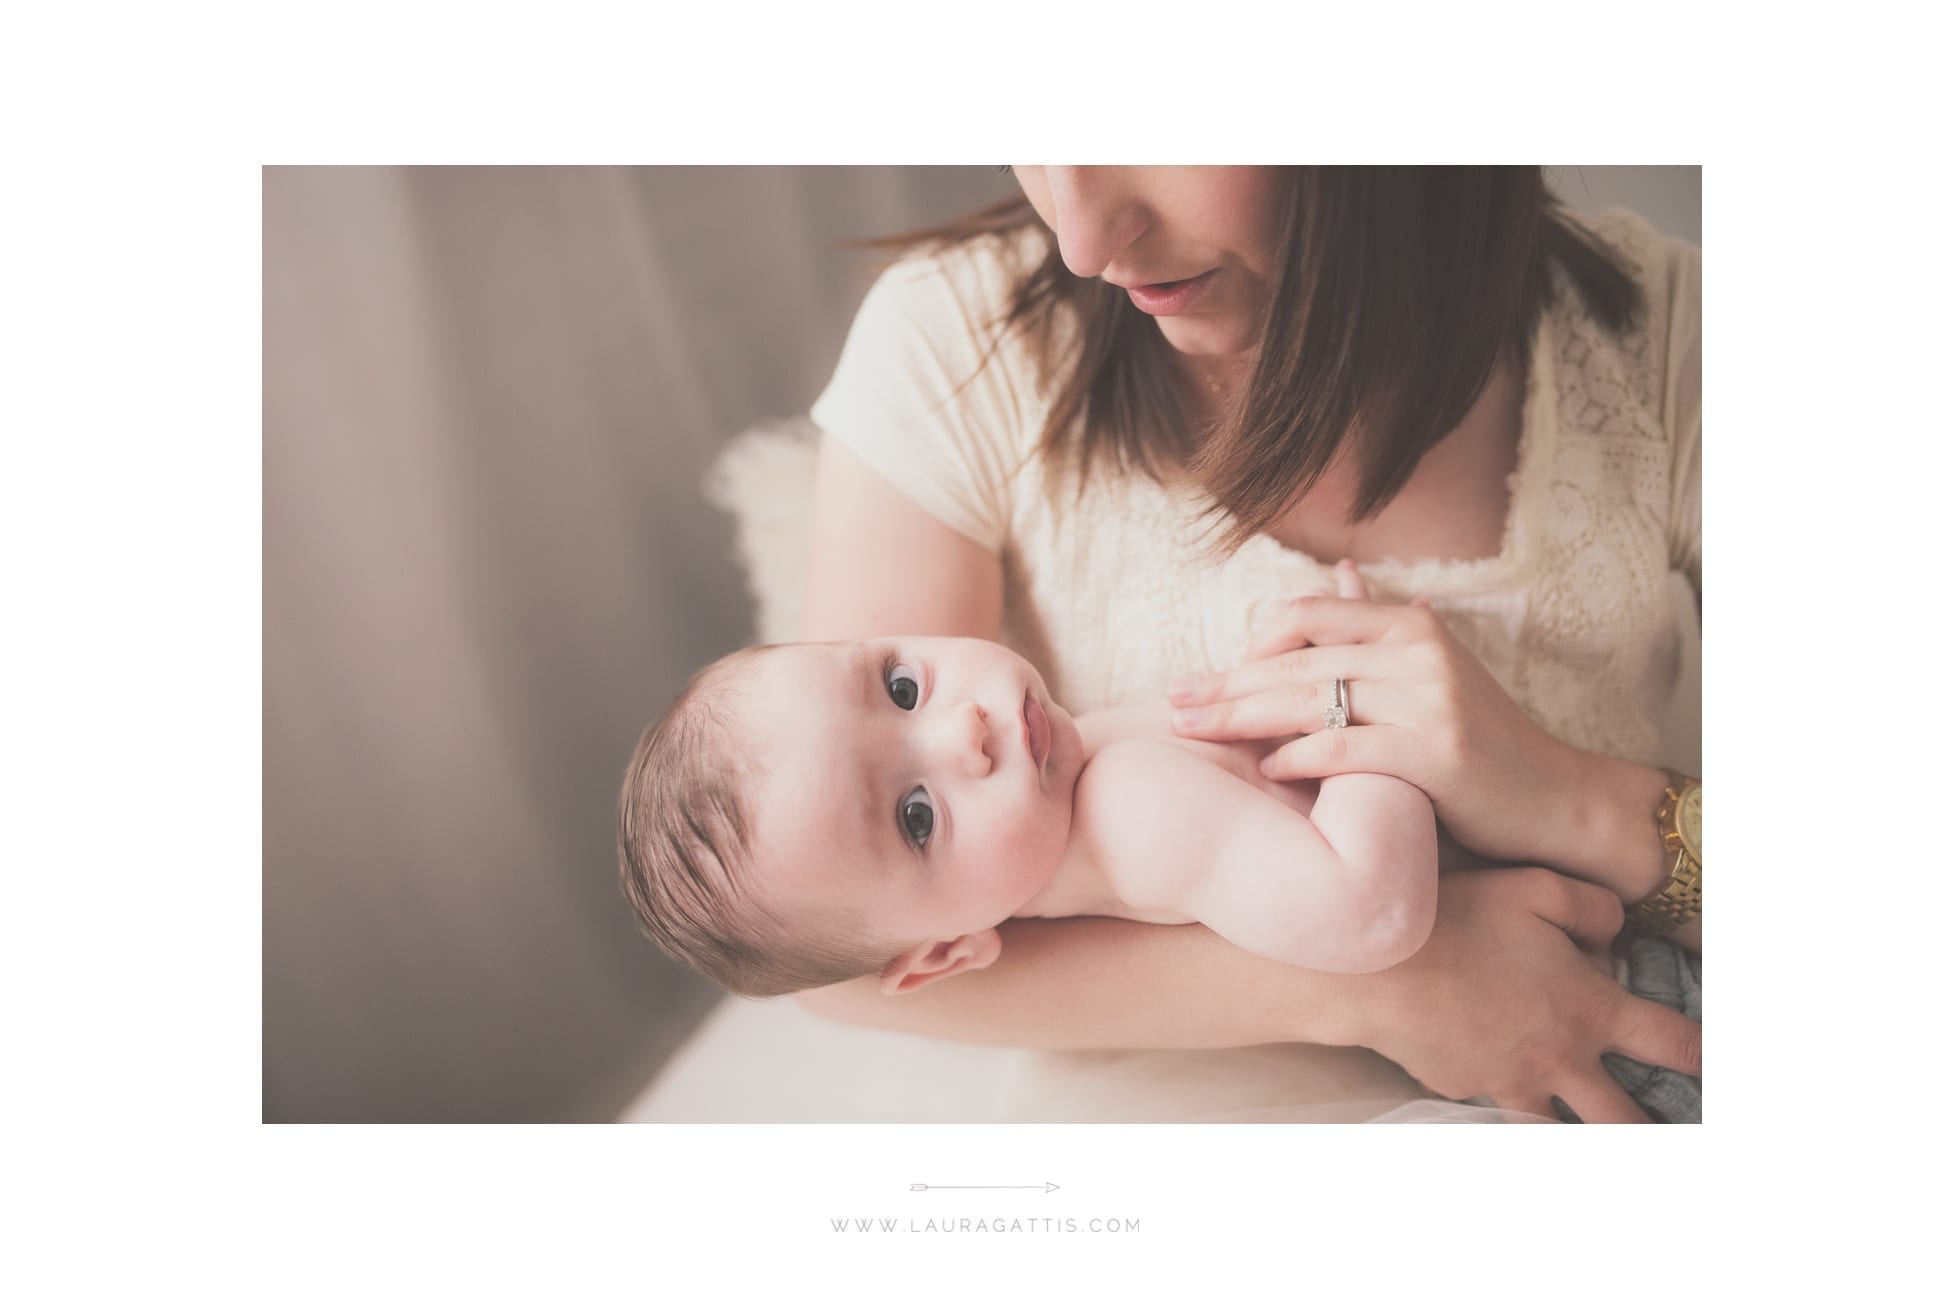 six month baby studio session | laura gattis photography